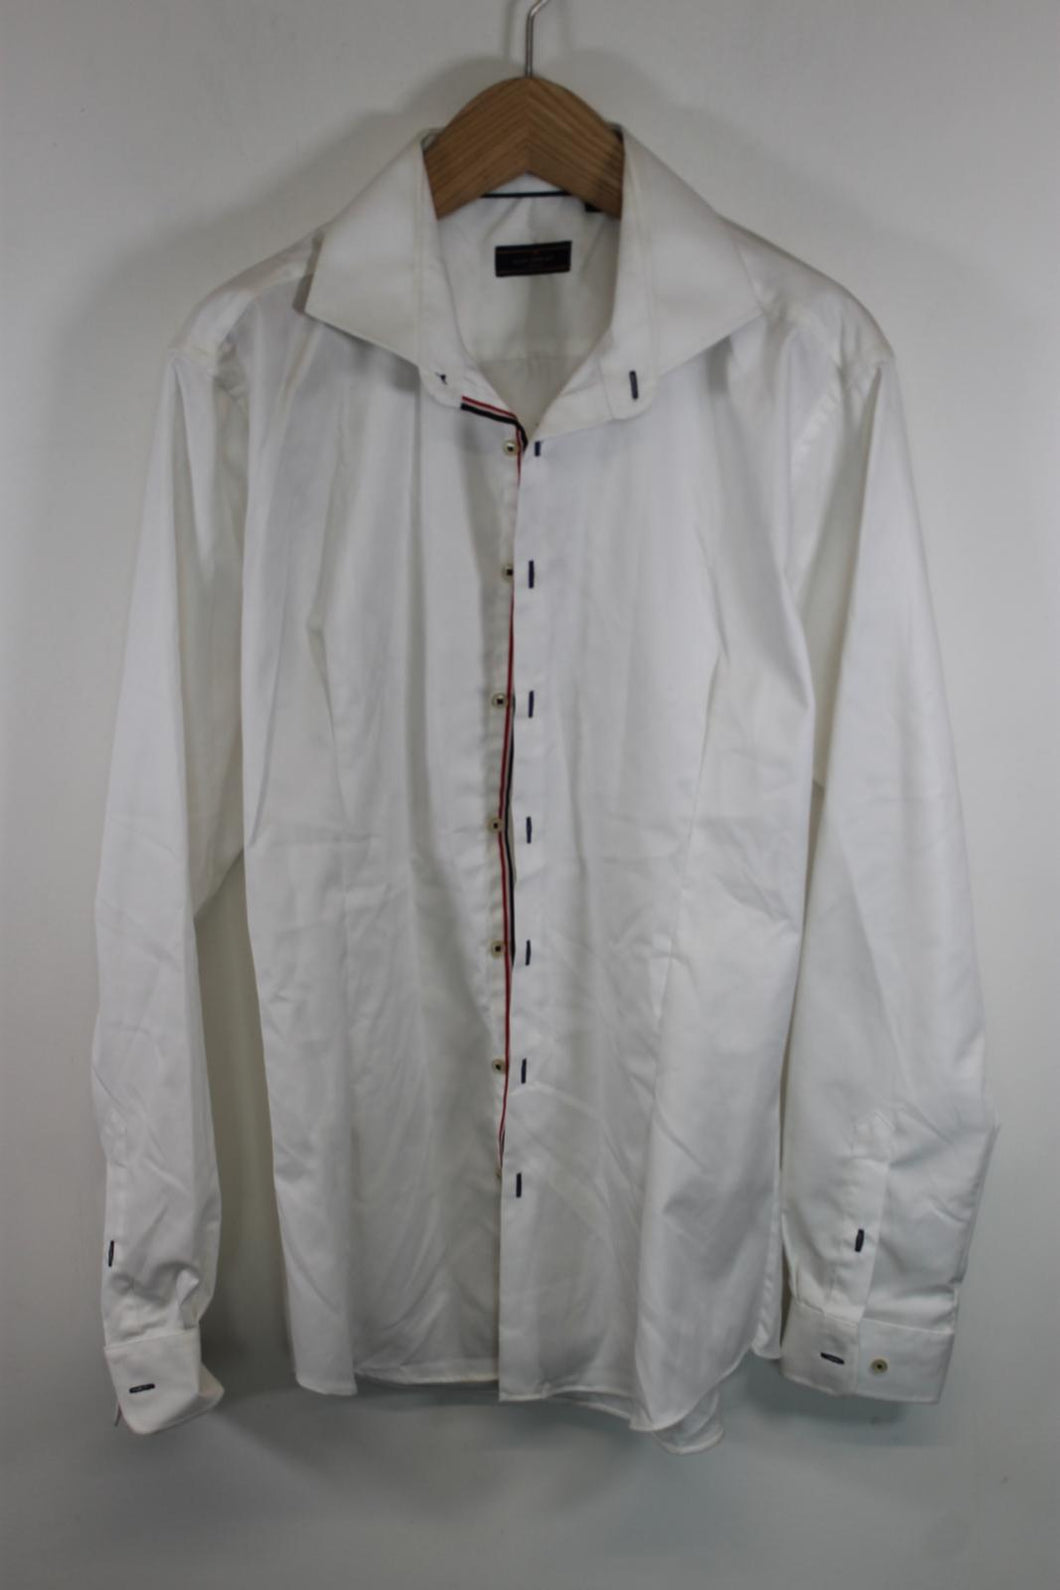 LUC BREVET Men's White Long Sleeve Button Down Shirt Size 17